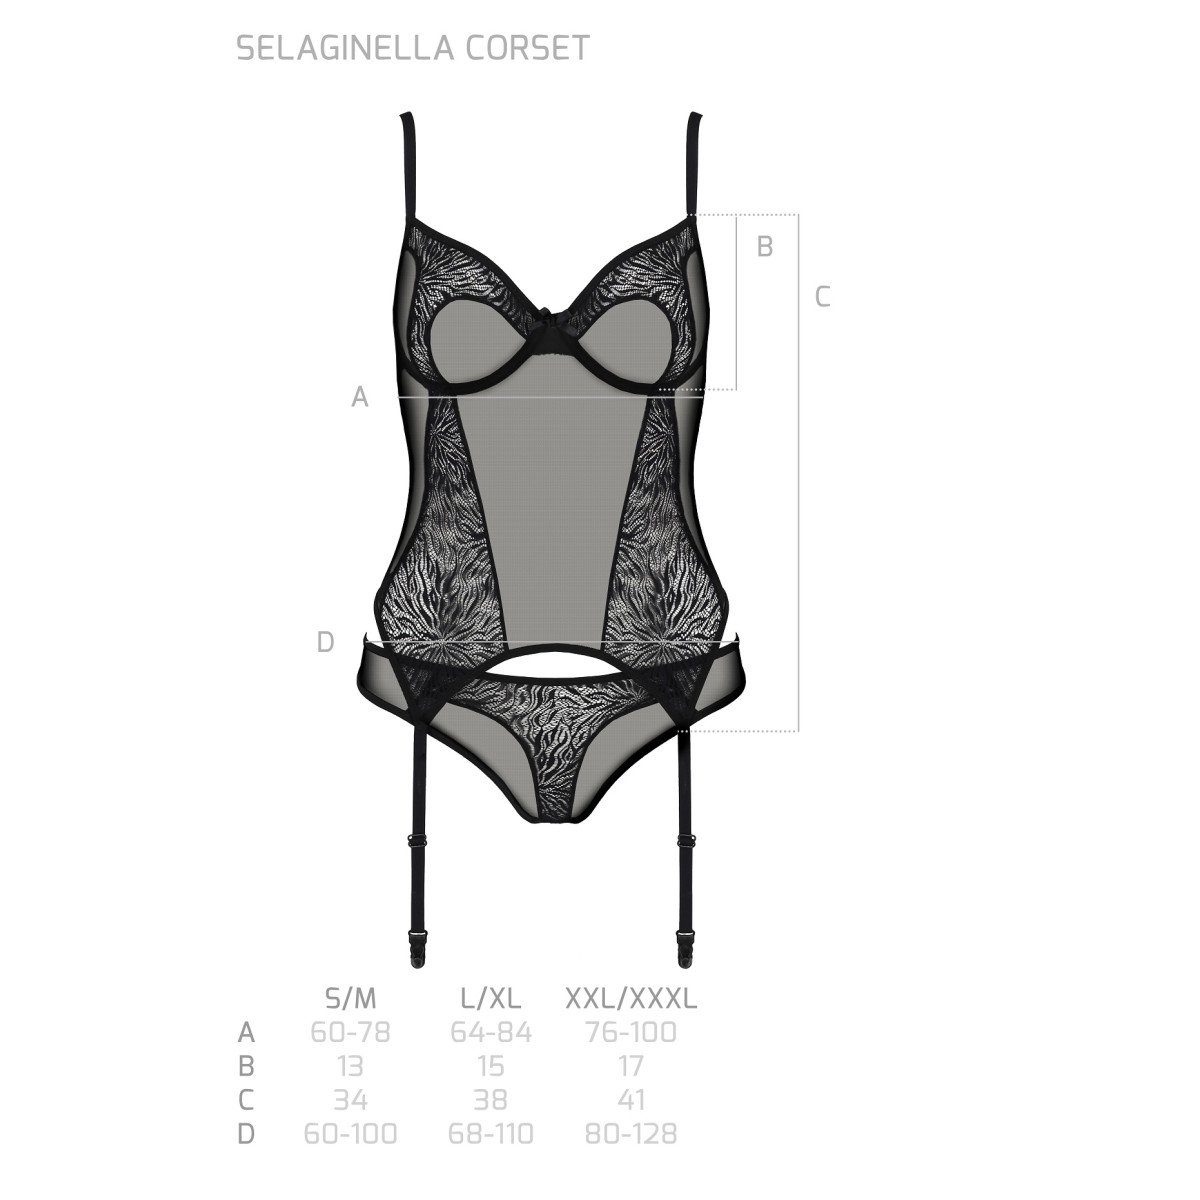 (L/XL,S/M,XXL) & corset thong ECO - Selaginella Passion black PE Collection Eco Corsage